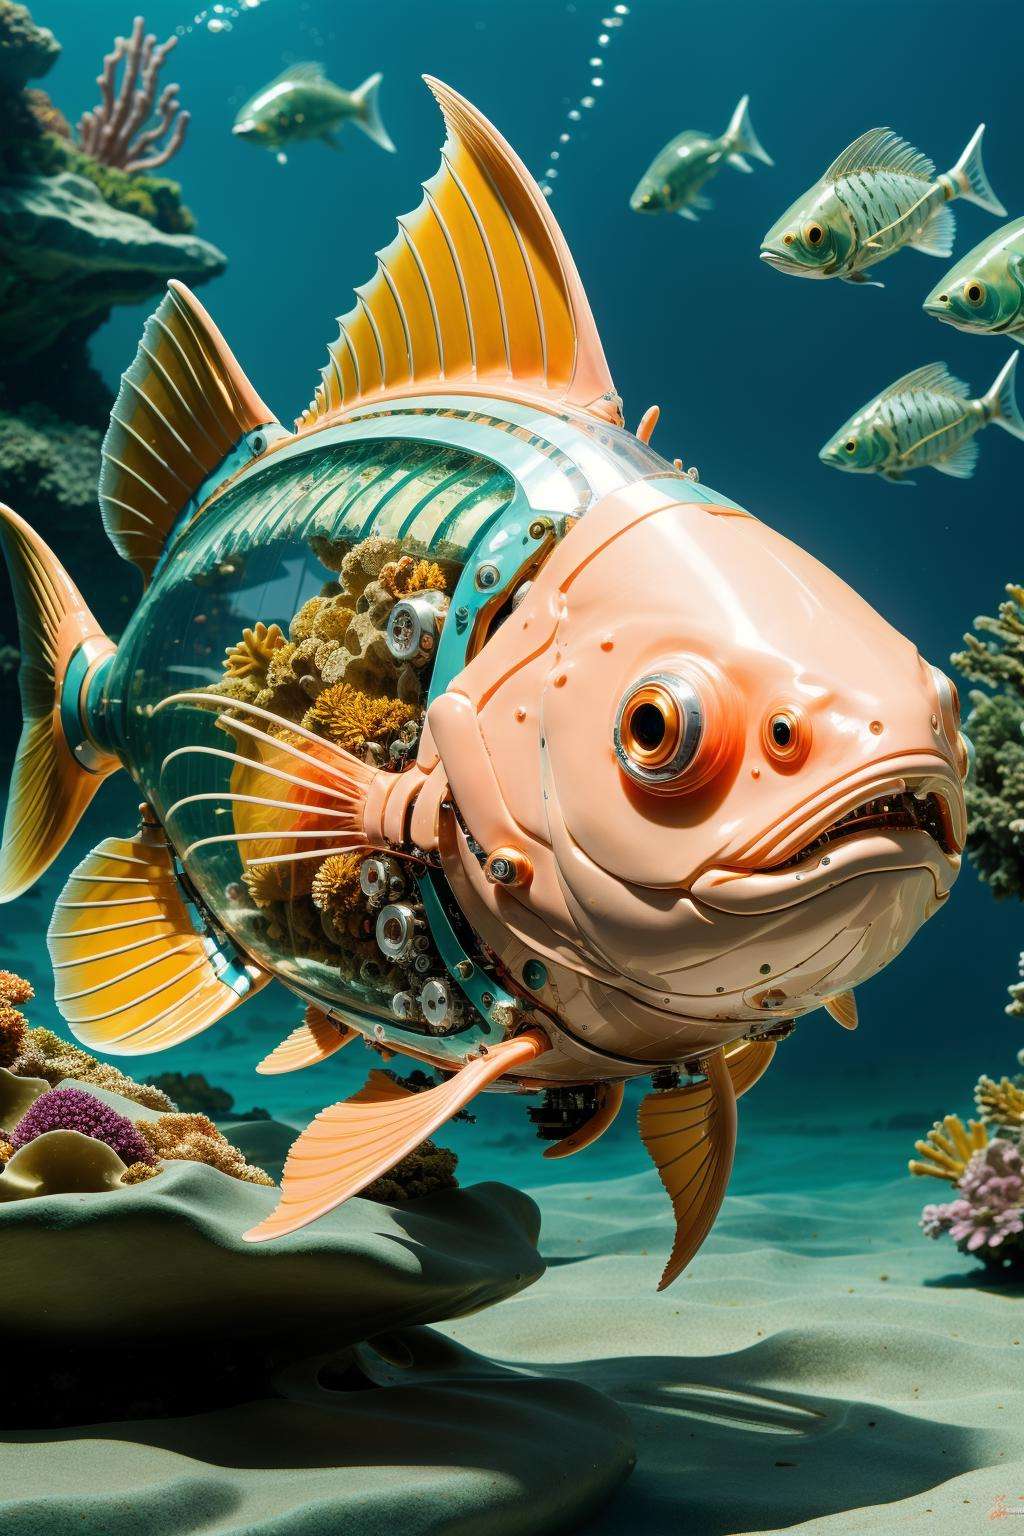 ((masterpiece)), ((best quality)), 8k, high detailed, ultra-detailed,(sleek stealth),(transparent:1.5),<lora:Mechanicalfish:0.6>,Mechanical fish, Abundant marine life,(Coral reefs:1.3),(Deep Sea:1.5),(Mechanical parts:1.3), 